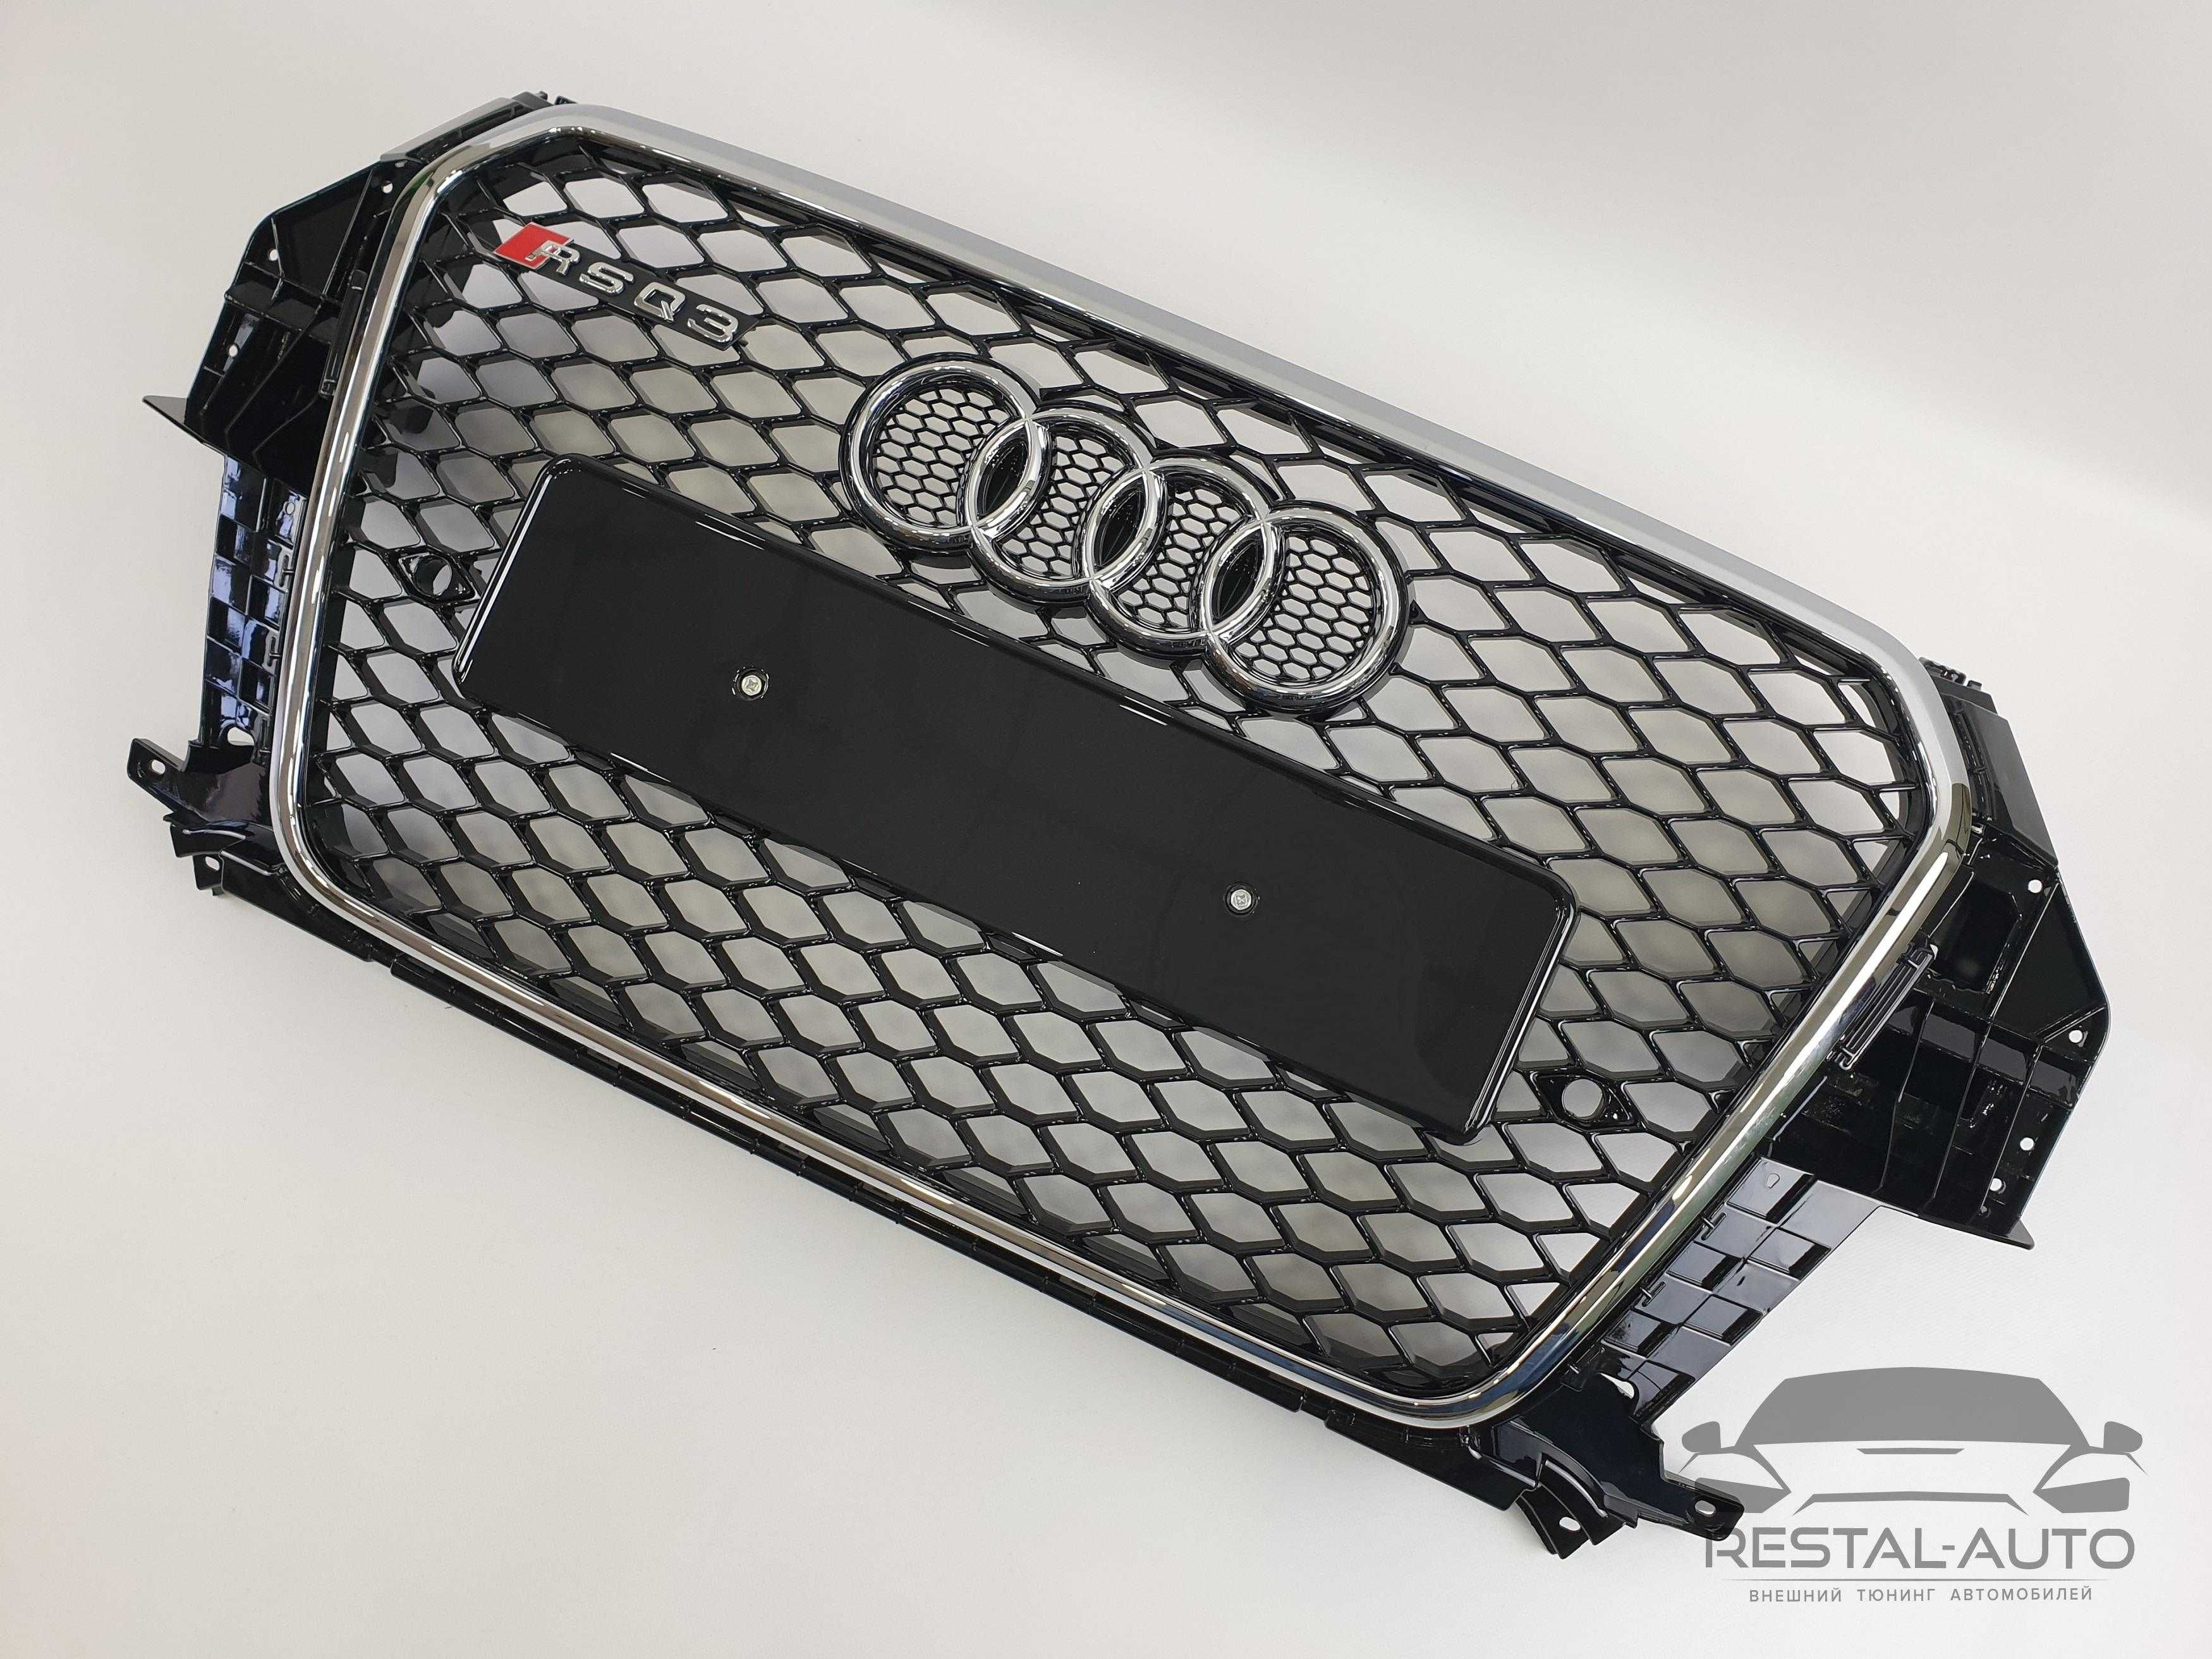 Решетка радиатора Audi Q3 2011-2014г в стиле RS